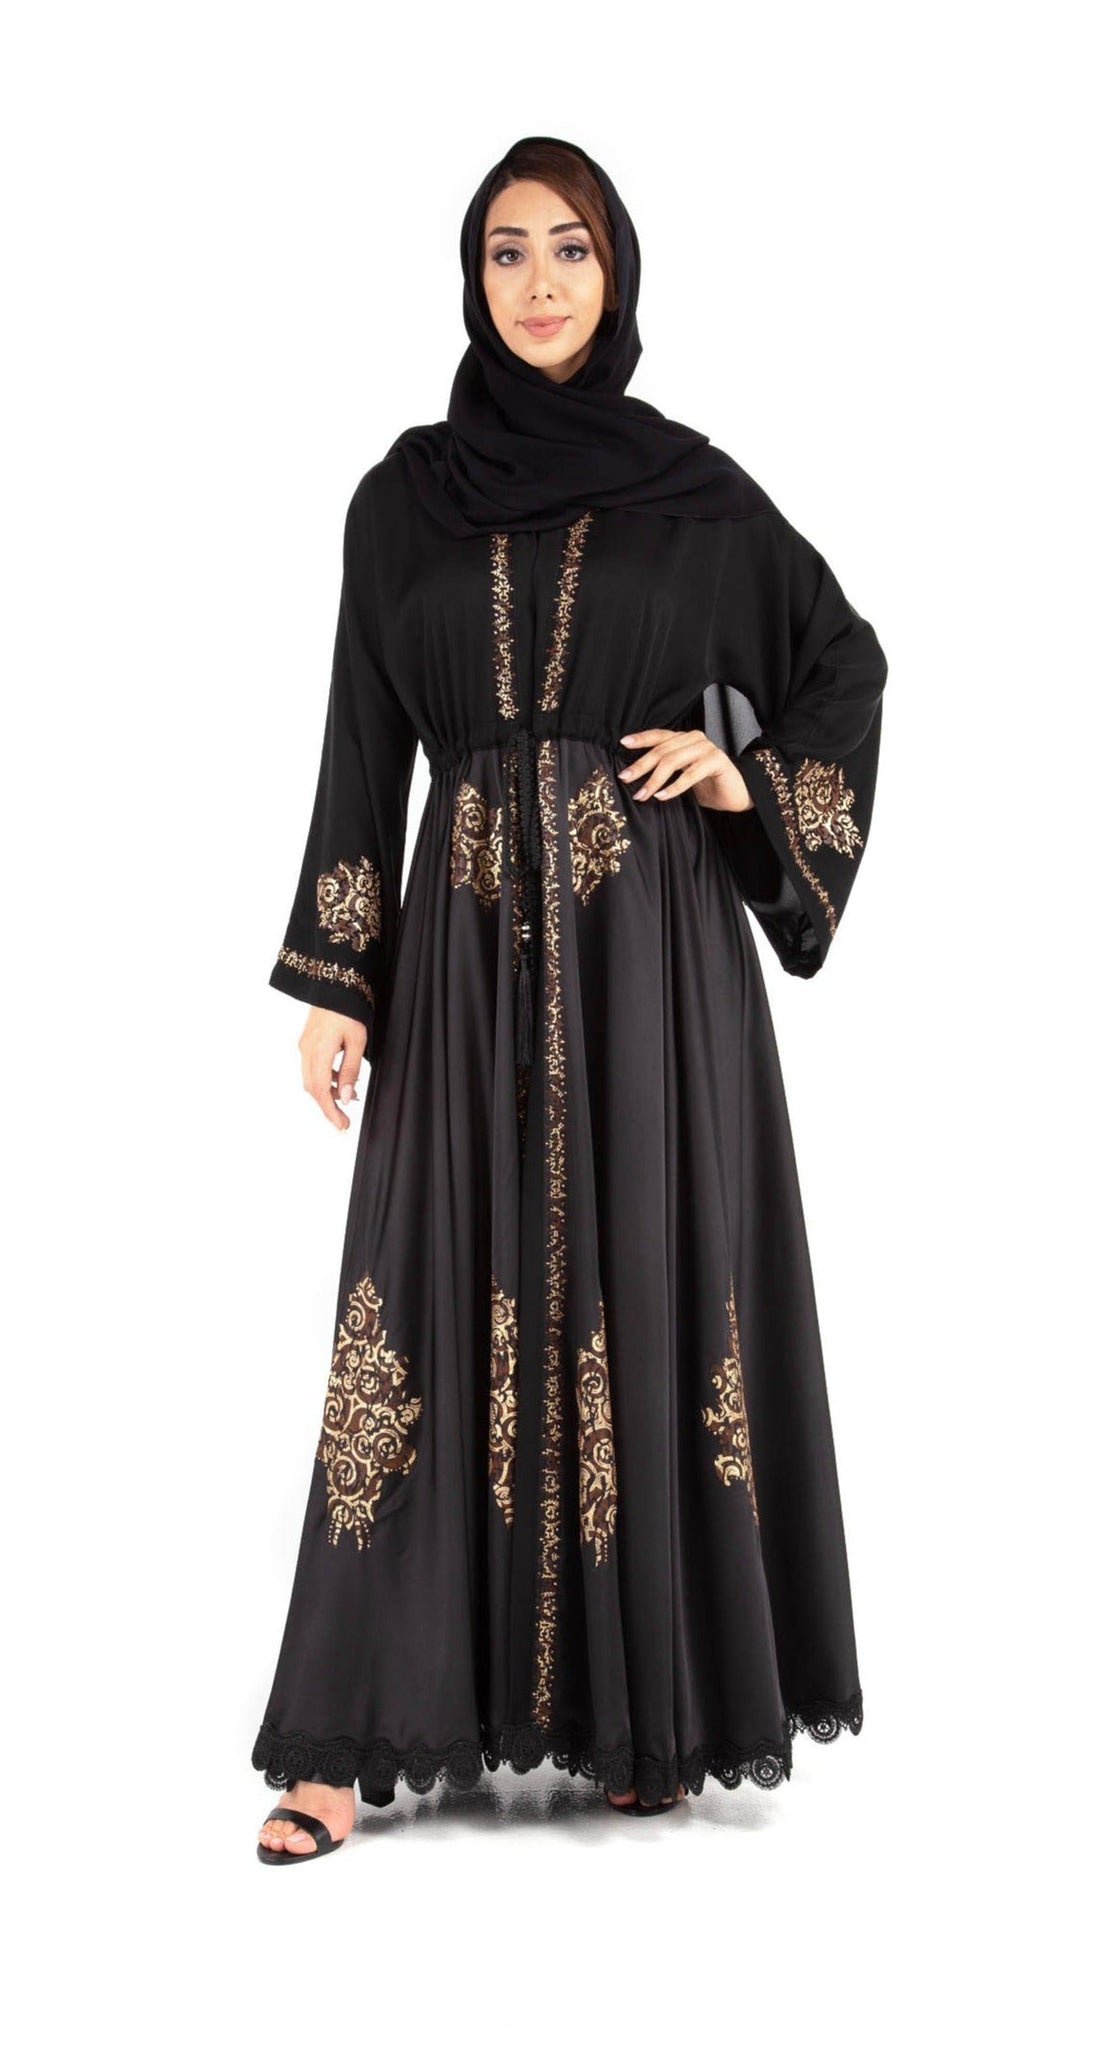 Hanayen Black Abaya With Belt And Prints